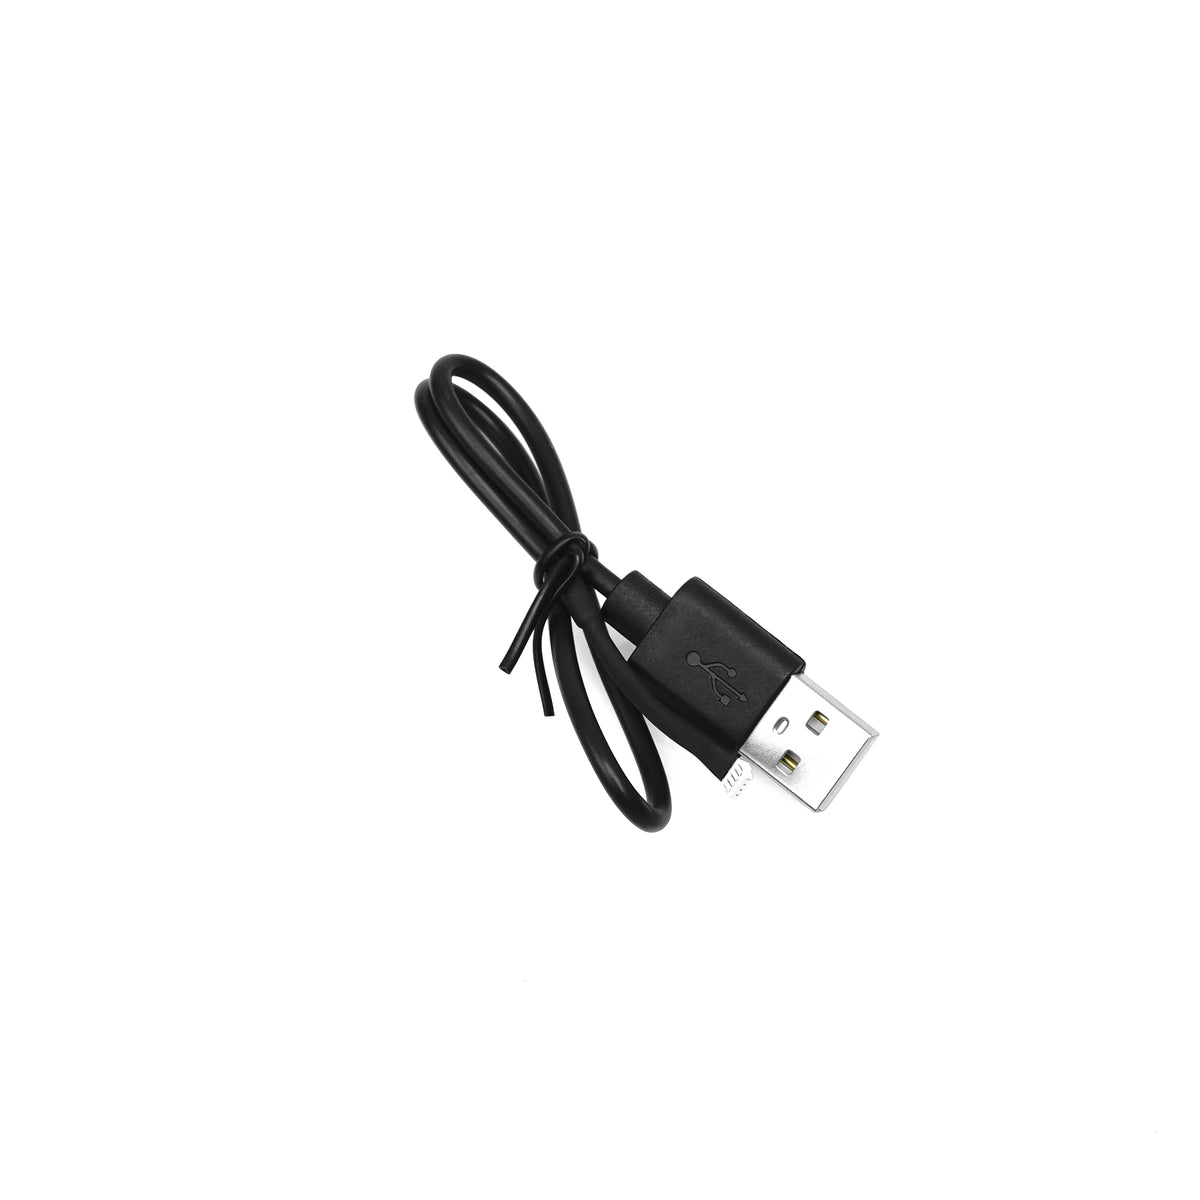 Walksnail Avatar Kit USB Cable